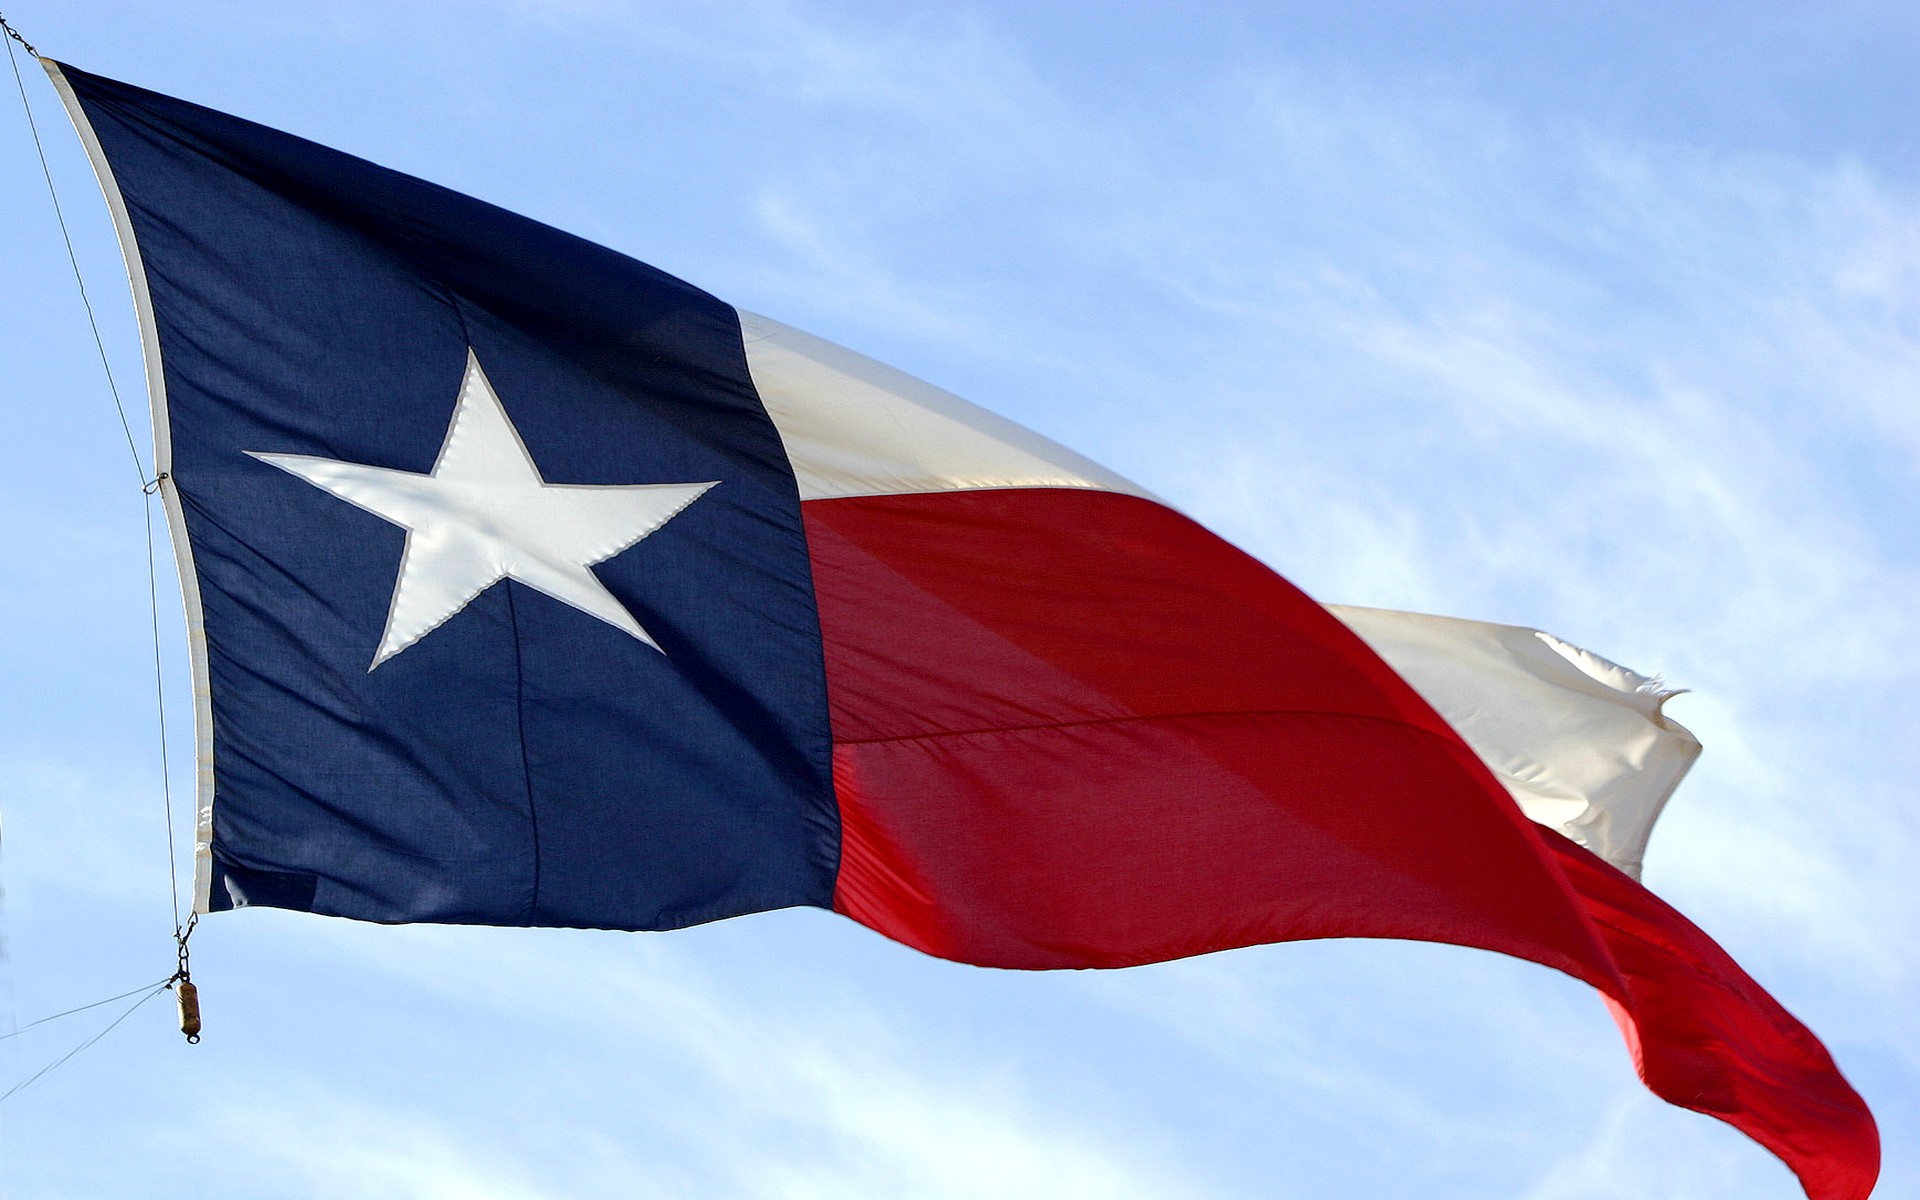 Texas Flag wallpaper ·① Download free cool HD wallpapers for desktop